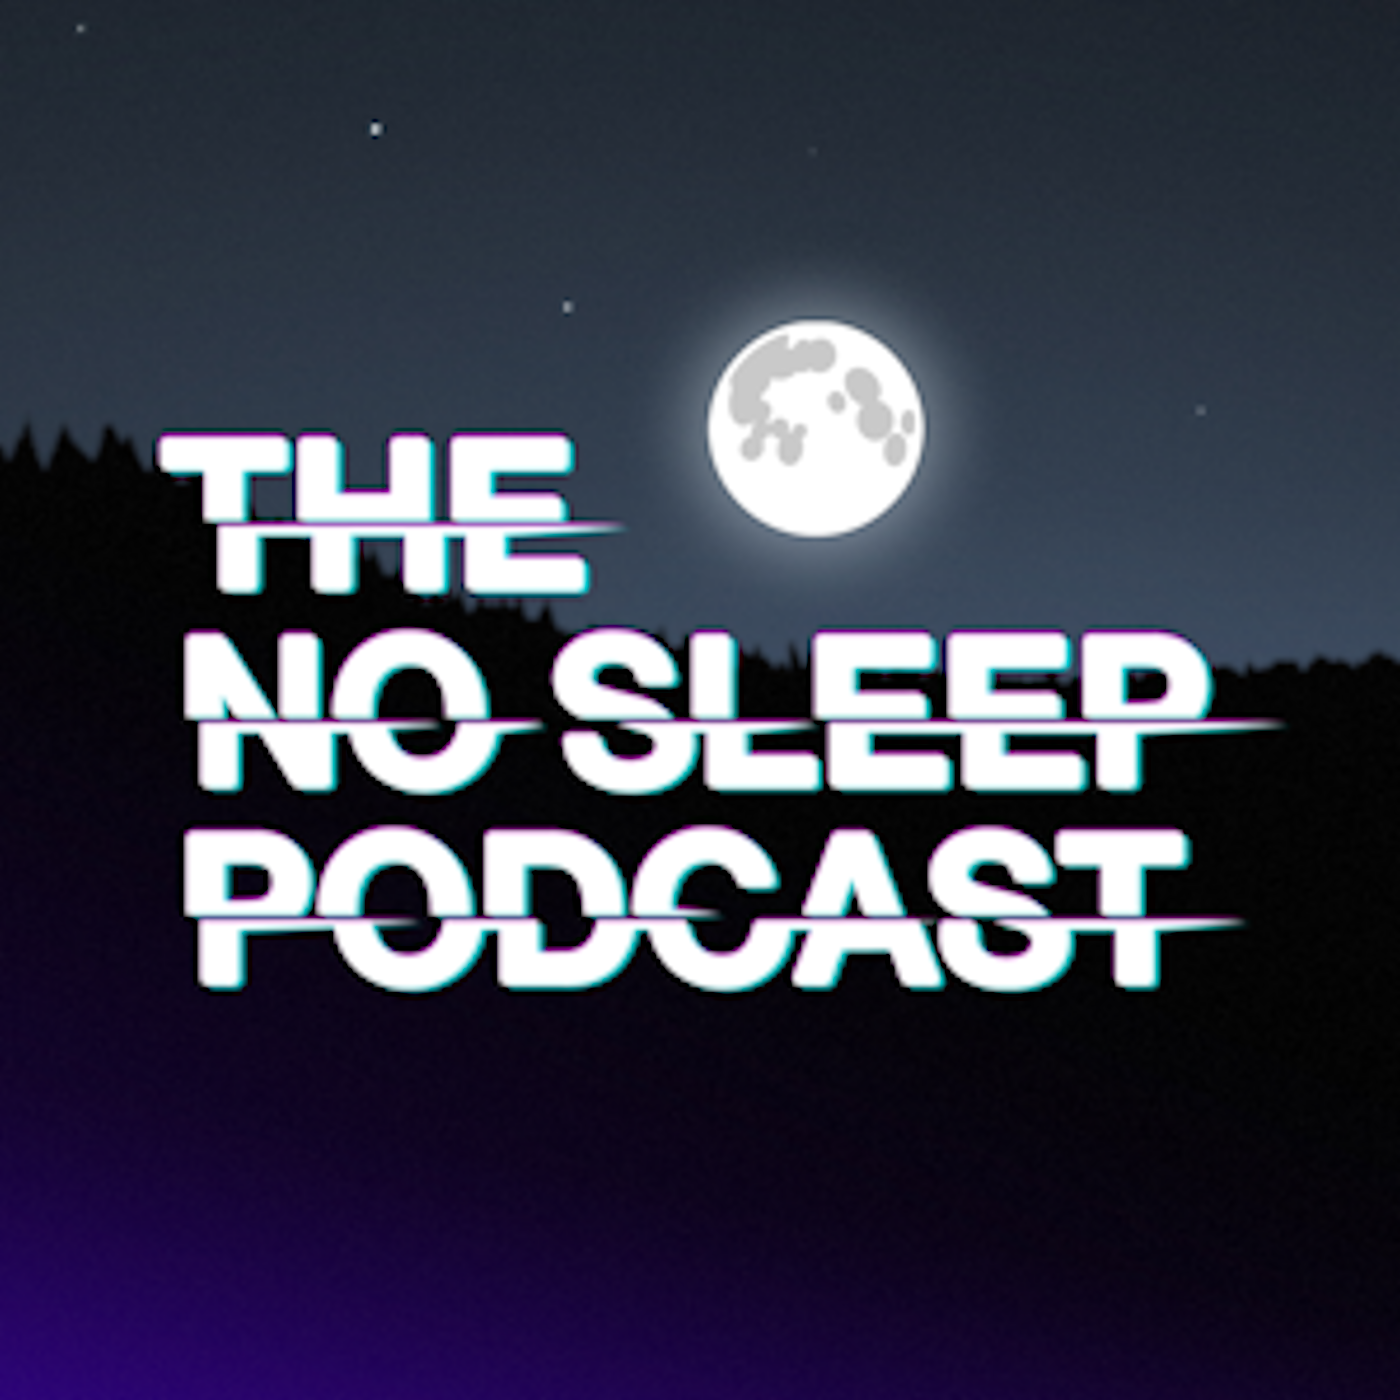 borrasca nosleep podcast